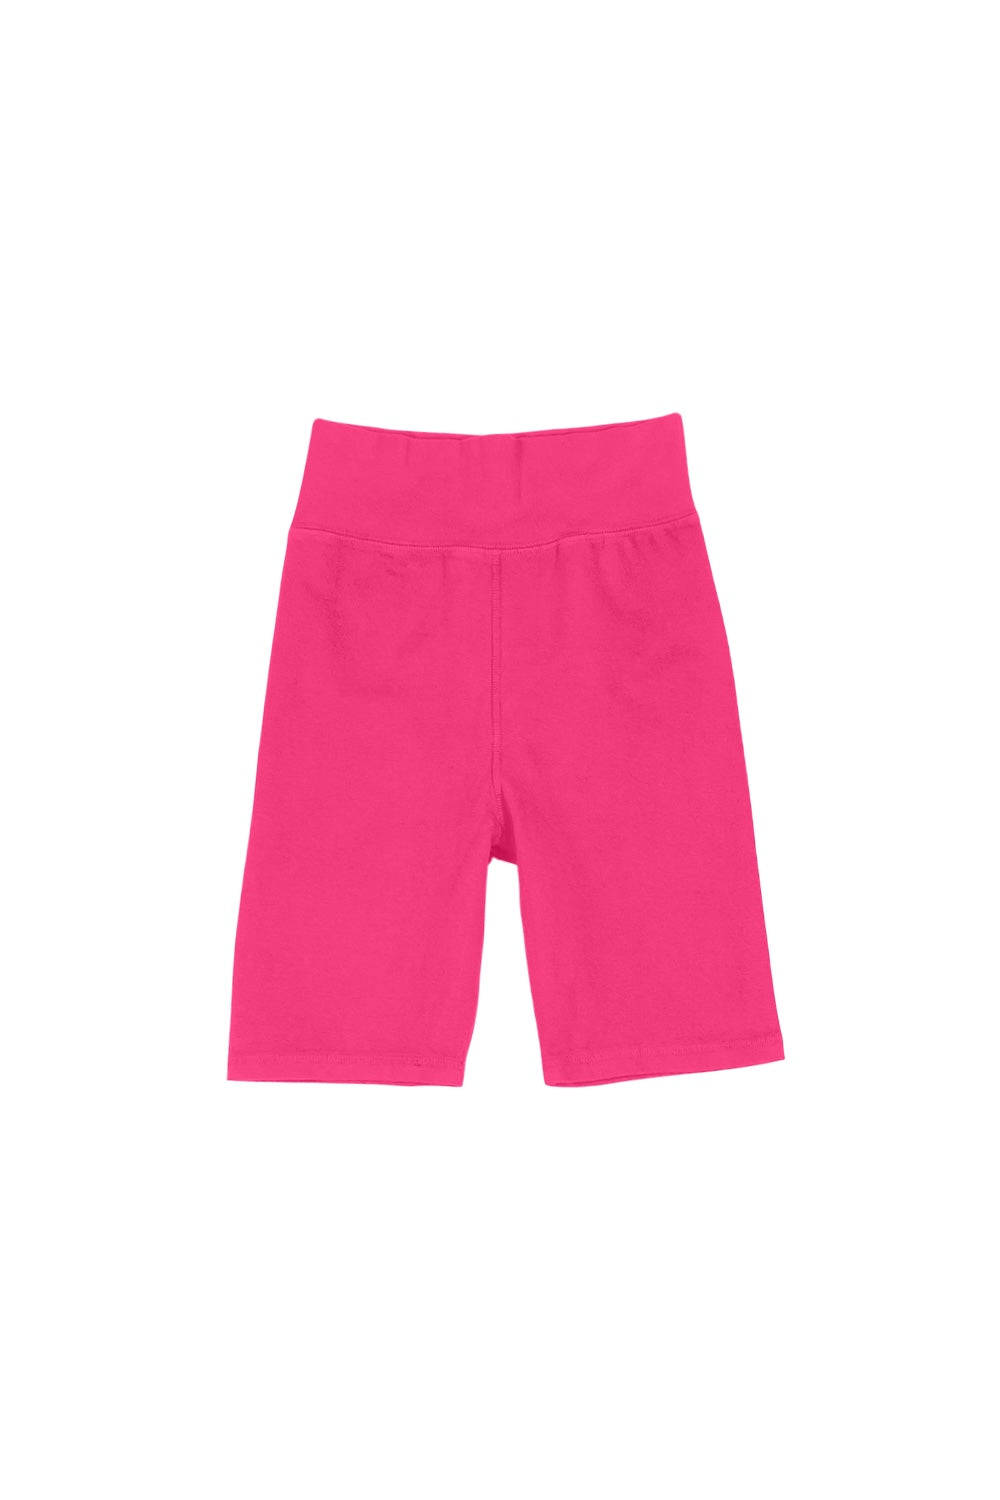 Bike Short | Jungmaven Hemp Clothing & Accessories / Color: Pink Grapefruit